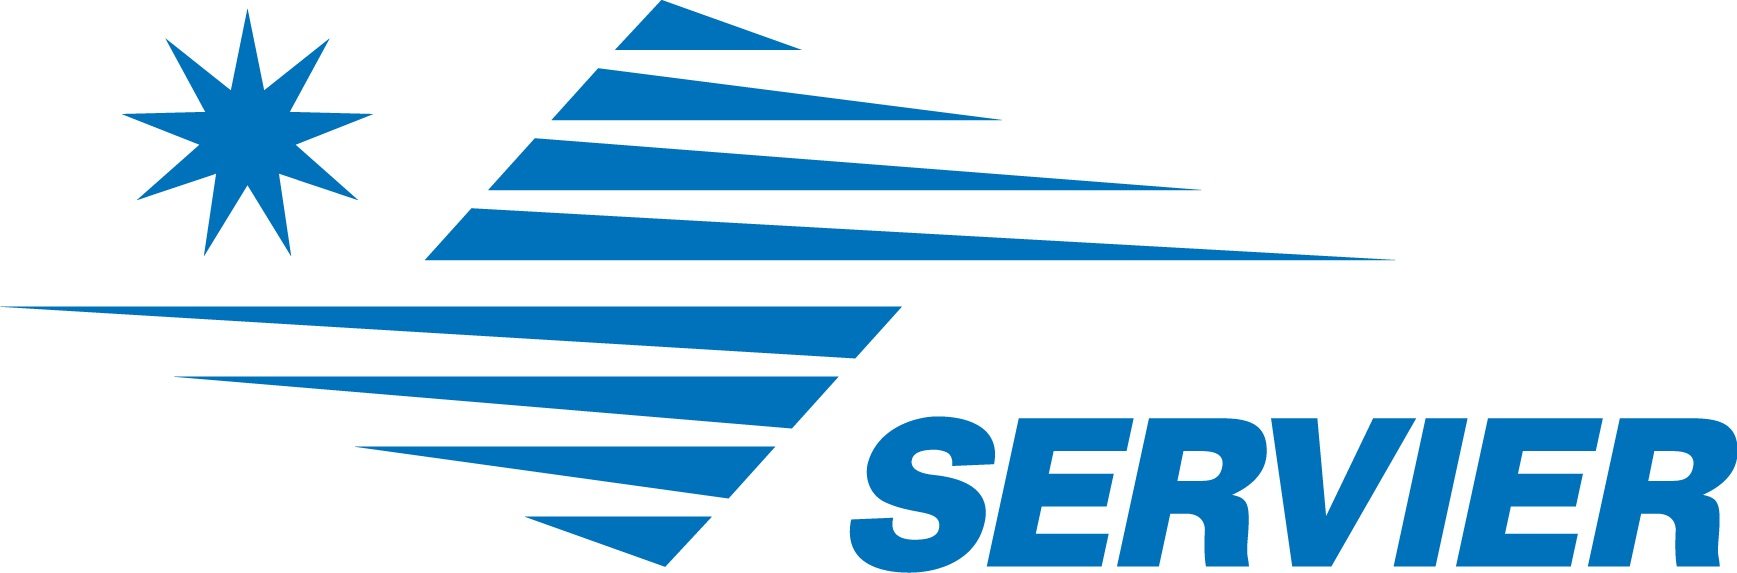 логотип Сервье